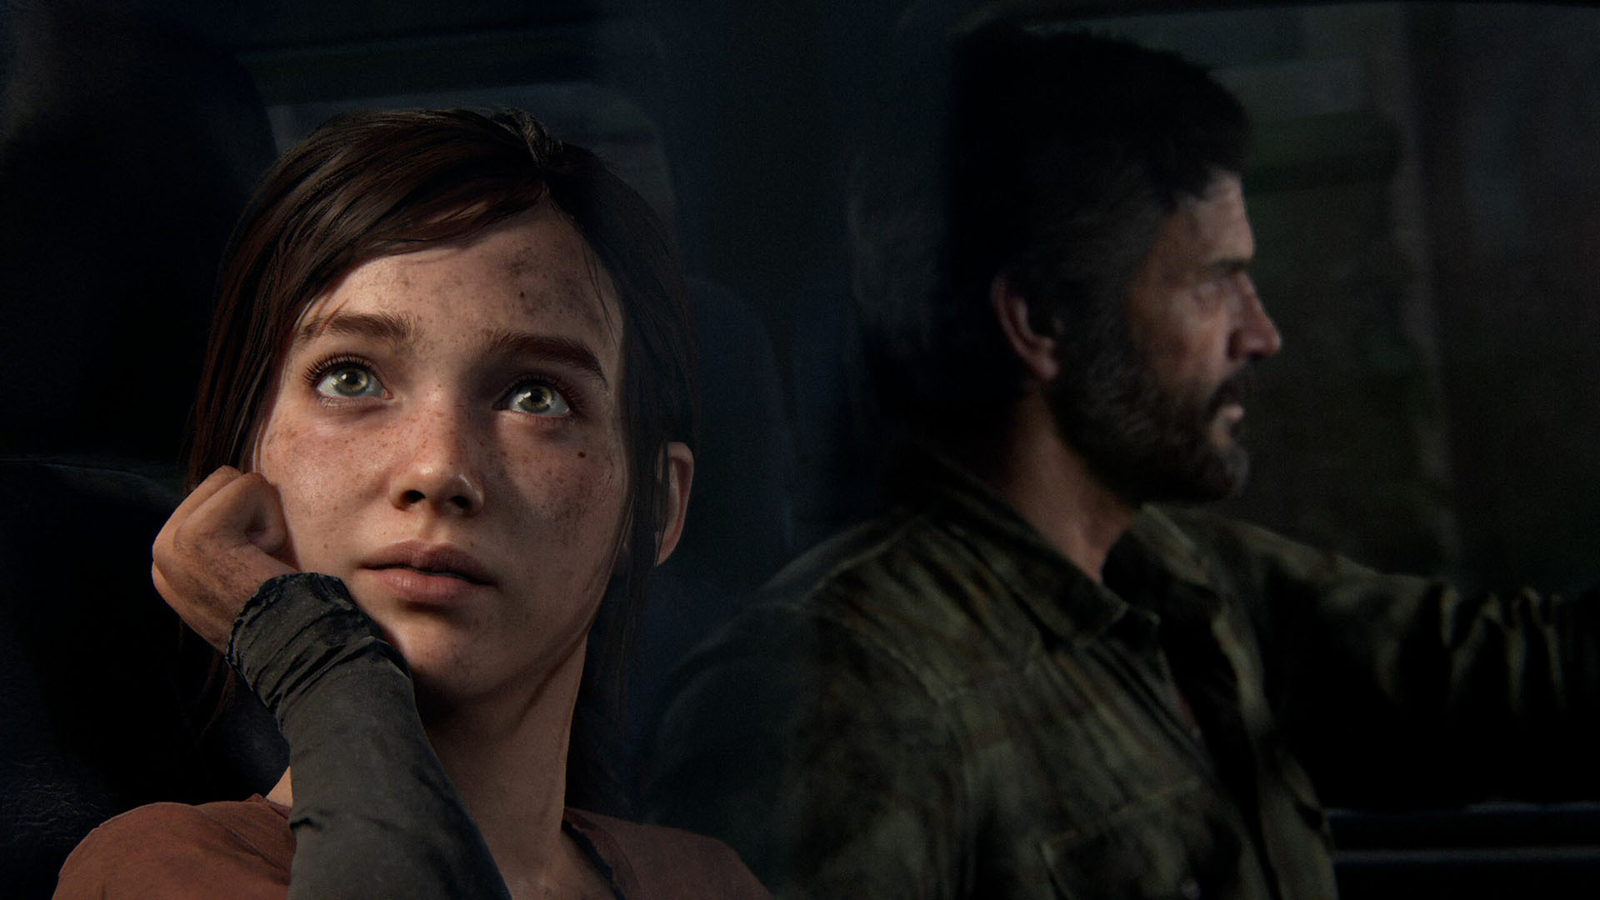 Video Game The Last of Us Part II 4k Ultra HD Wallpaper